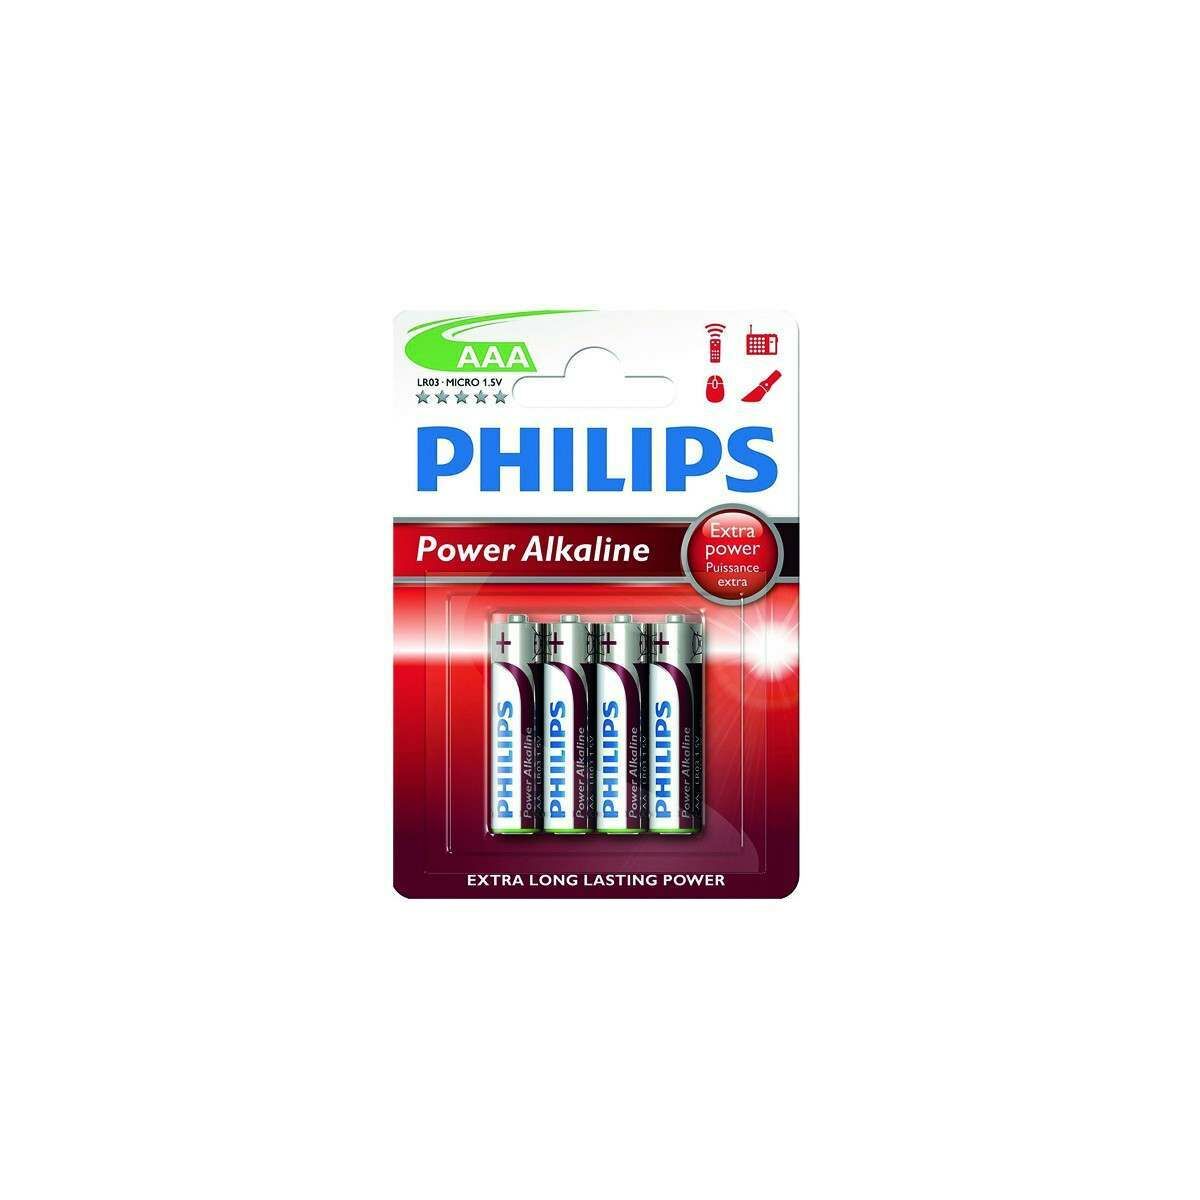 Philips Power Alkaline AAA Batteries (Pack of 4) image 1